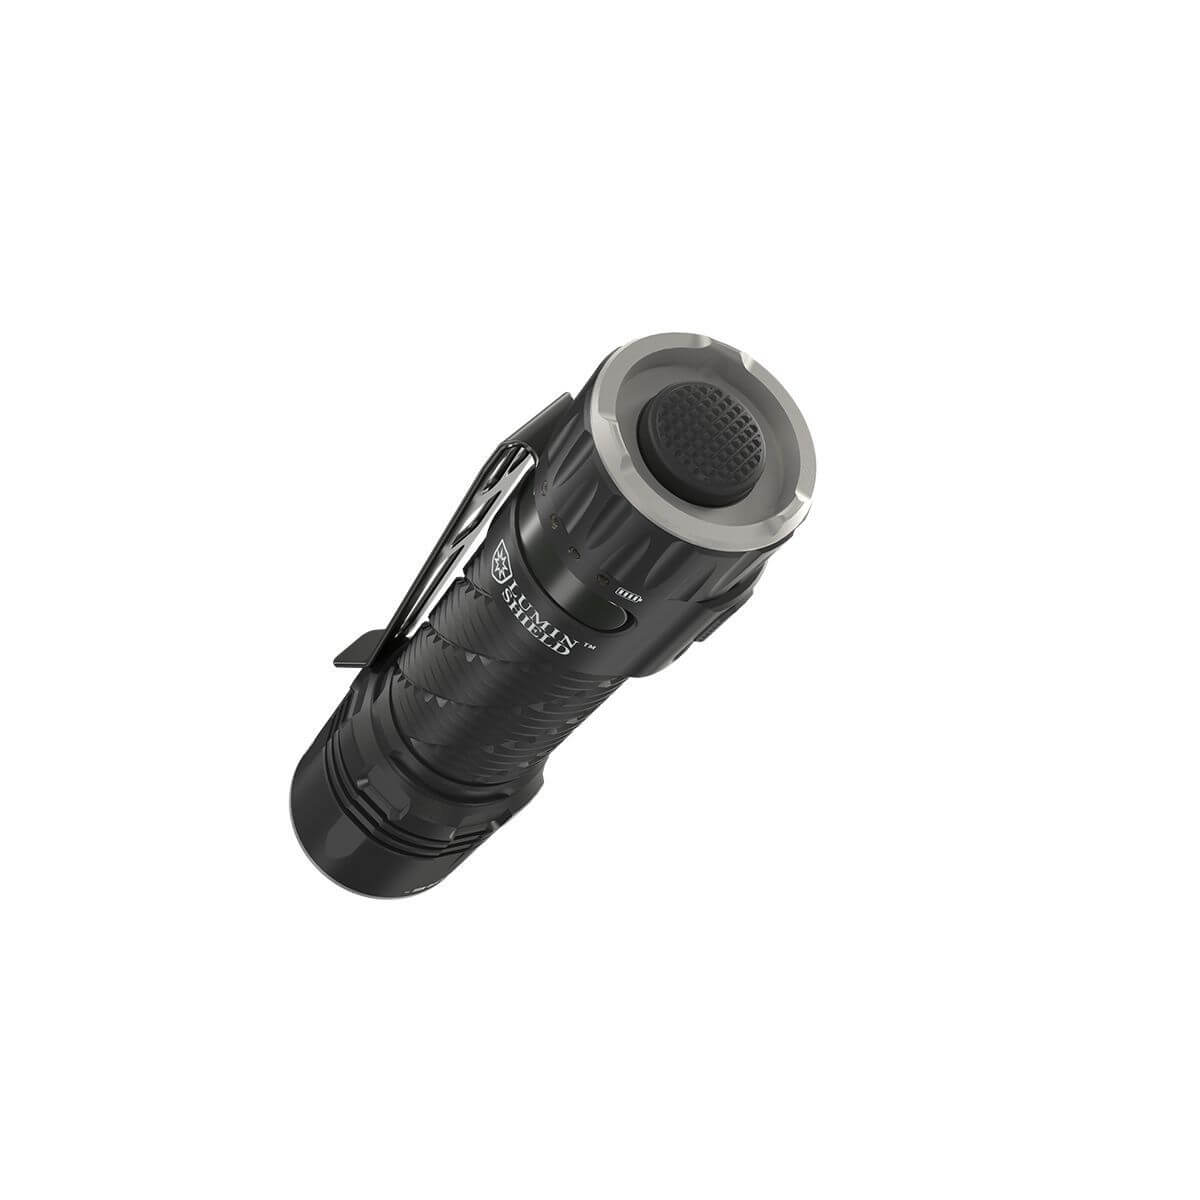 Pre-order Nitecore EDC35 5,000 Lumens Tactical EDC Flashlight